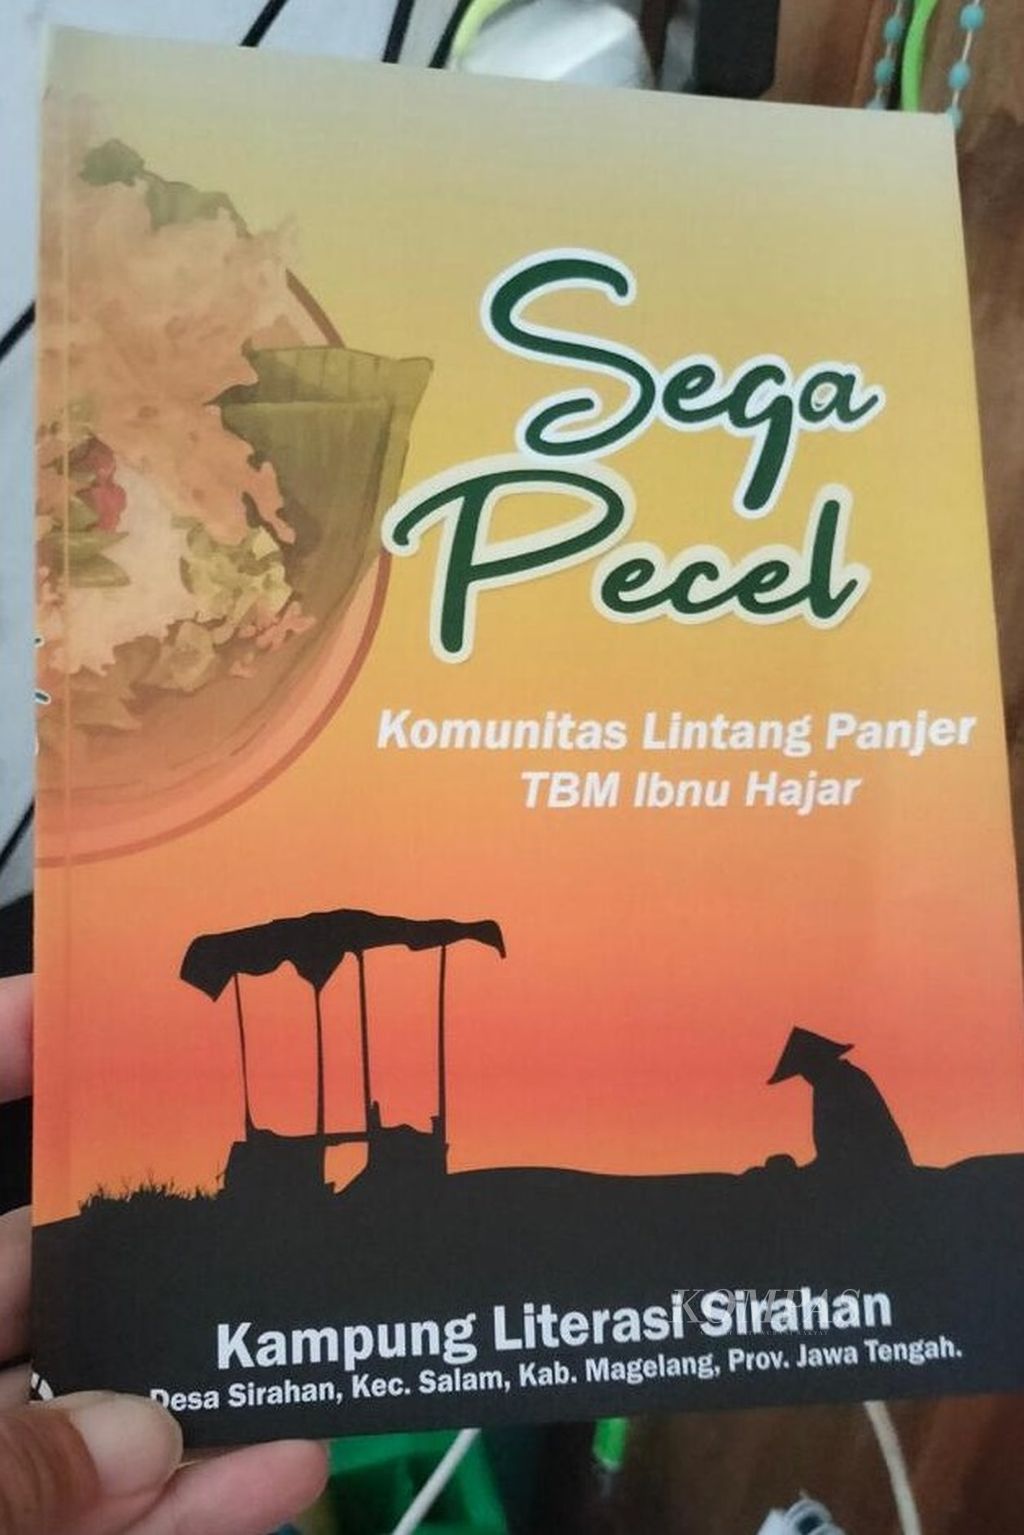 Buku <i>Sega Pecel </i>yang berisi kumpulan geguritan dan cerita pendek, karya anggota komunitas Lintang Panjer dari Desa Sirahan, Kecamatan Salam, Kabupaten Magelang, Jawa Tengah.